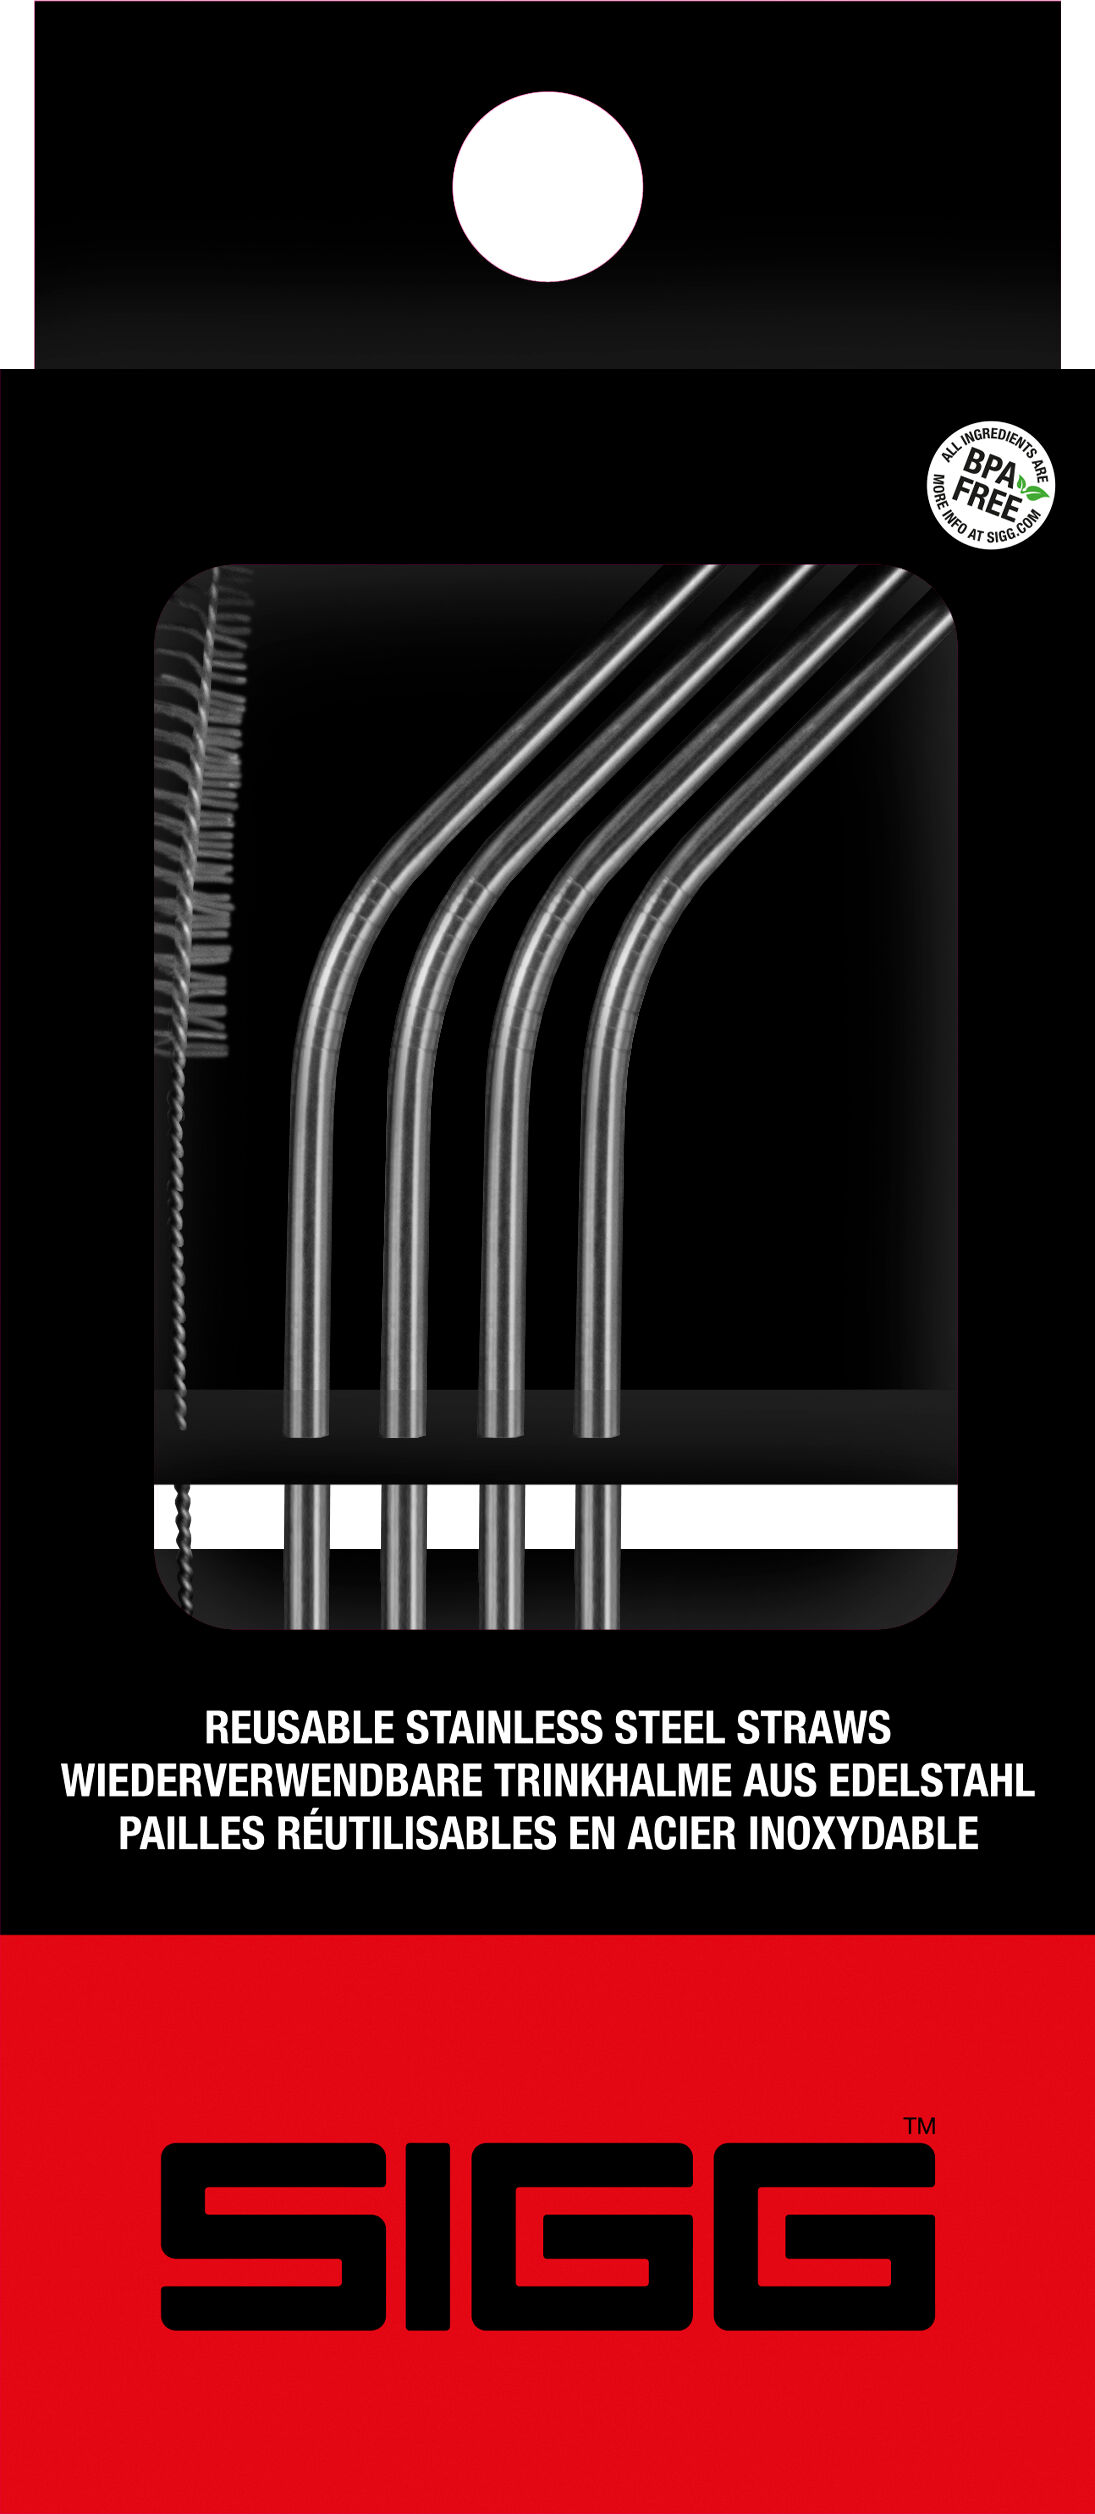 Sigg Stainless Steel Straw Set | Hardloop